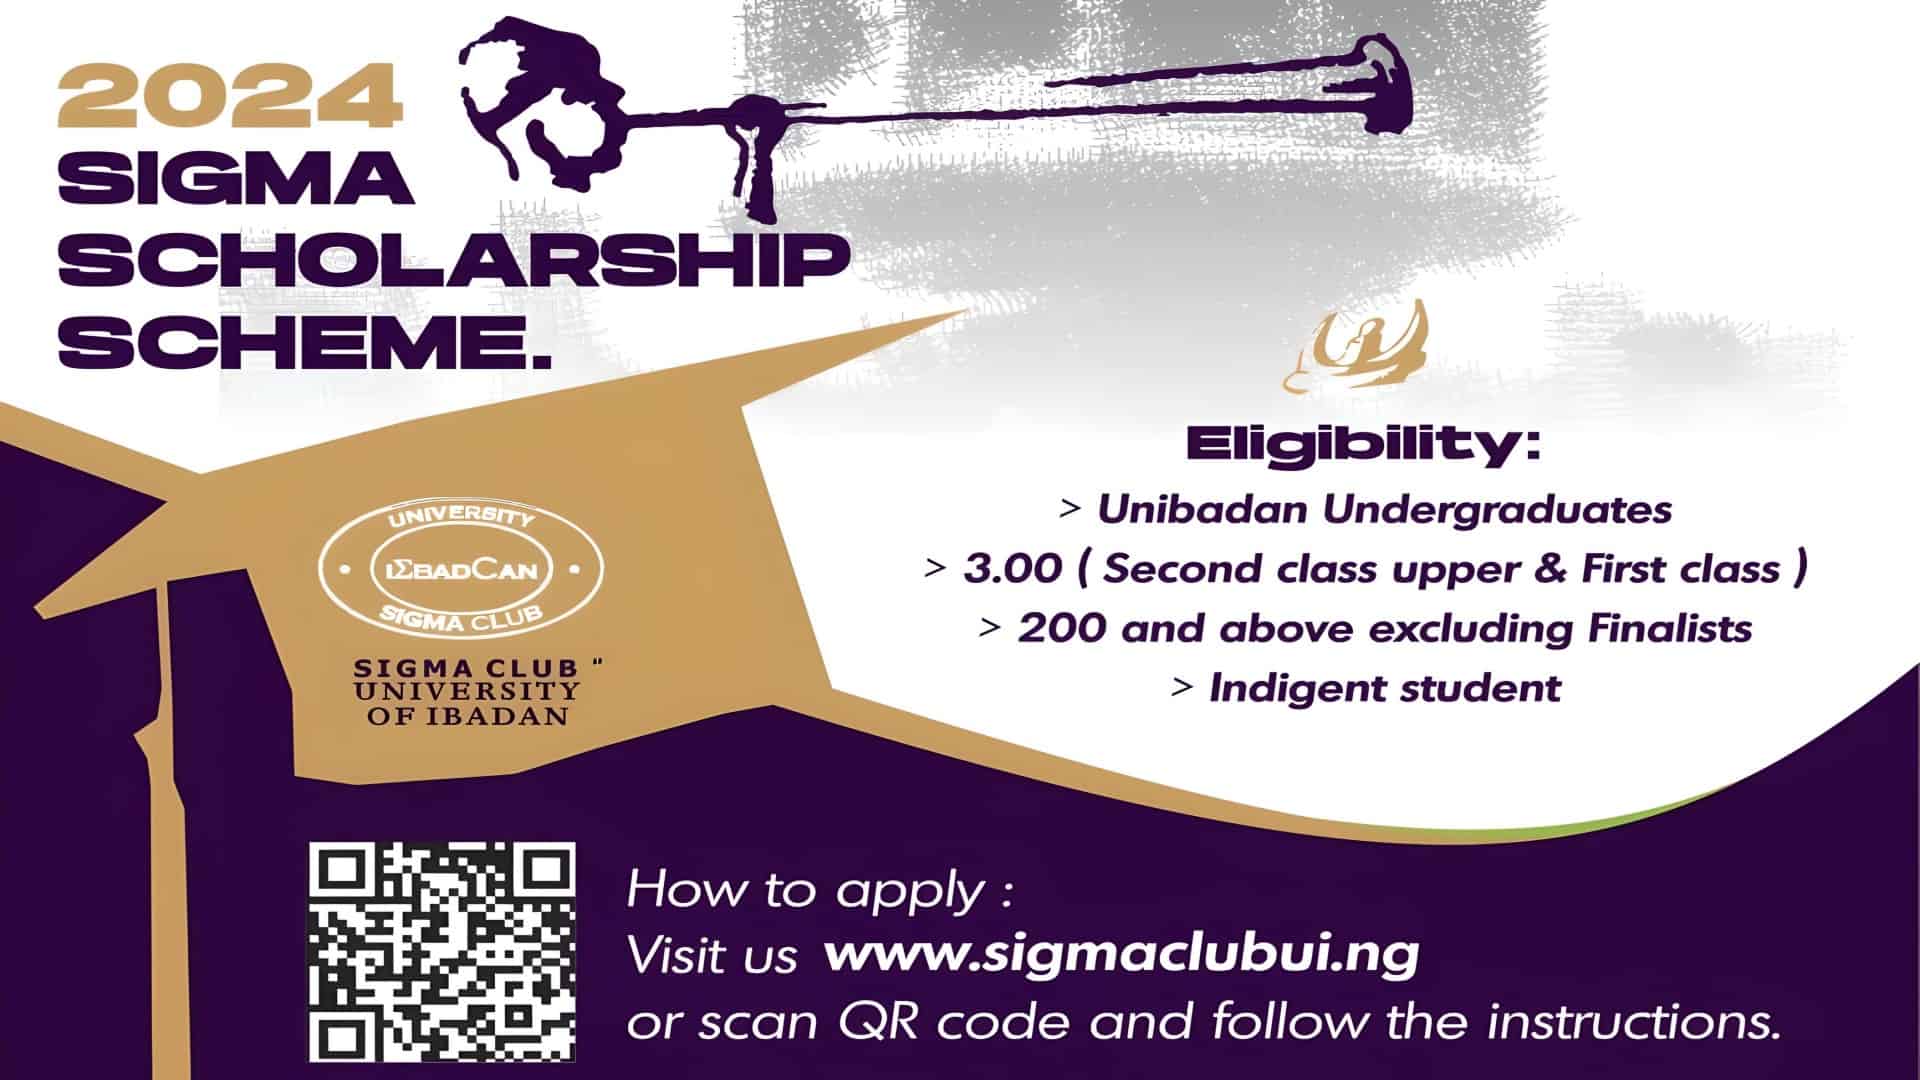 Sigma Club Scholarship Scheme at the University of Ibadan